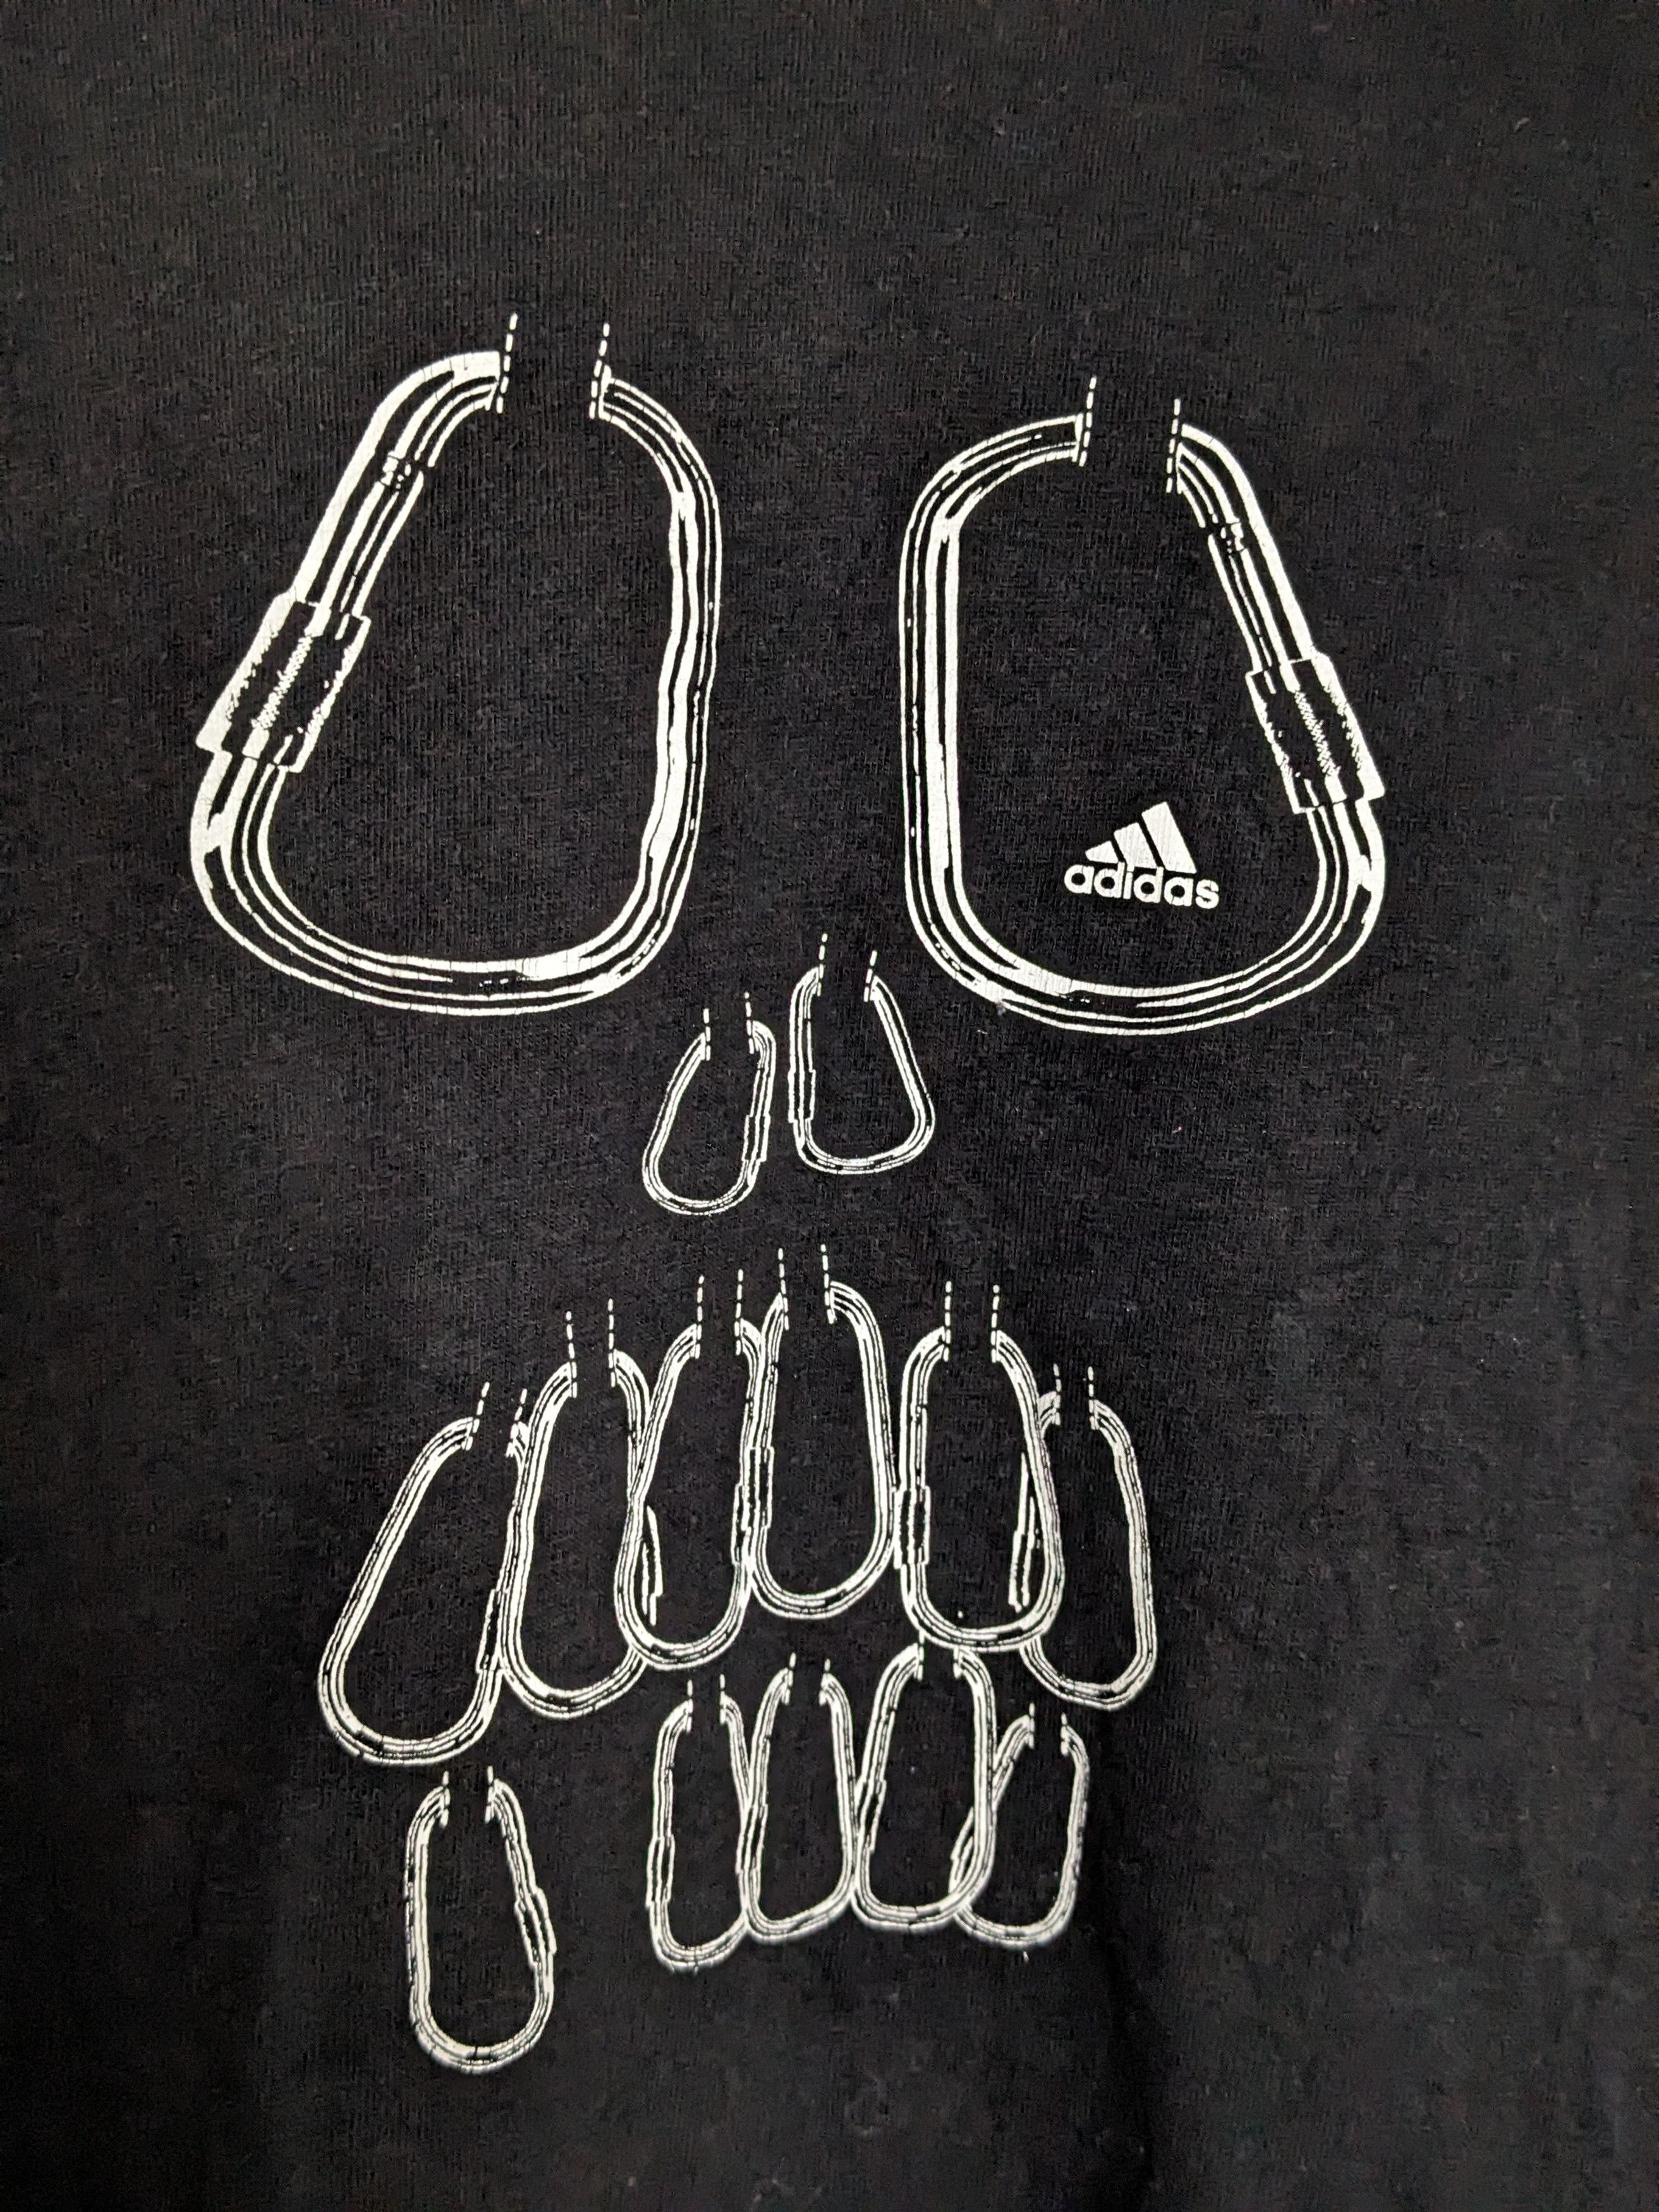 Adidas Skull Carabiner Rock Climbing Sunfaded Black Shirt - 2